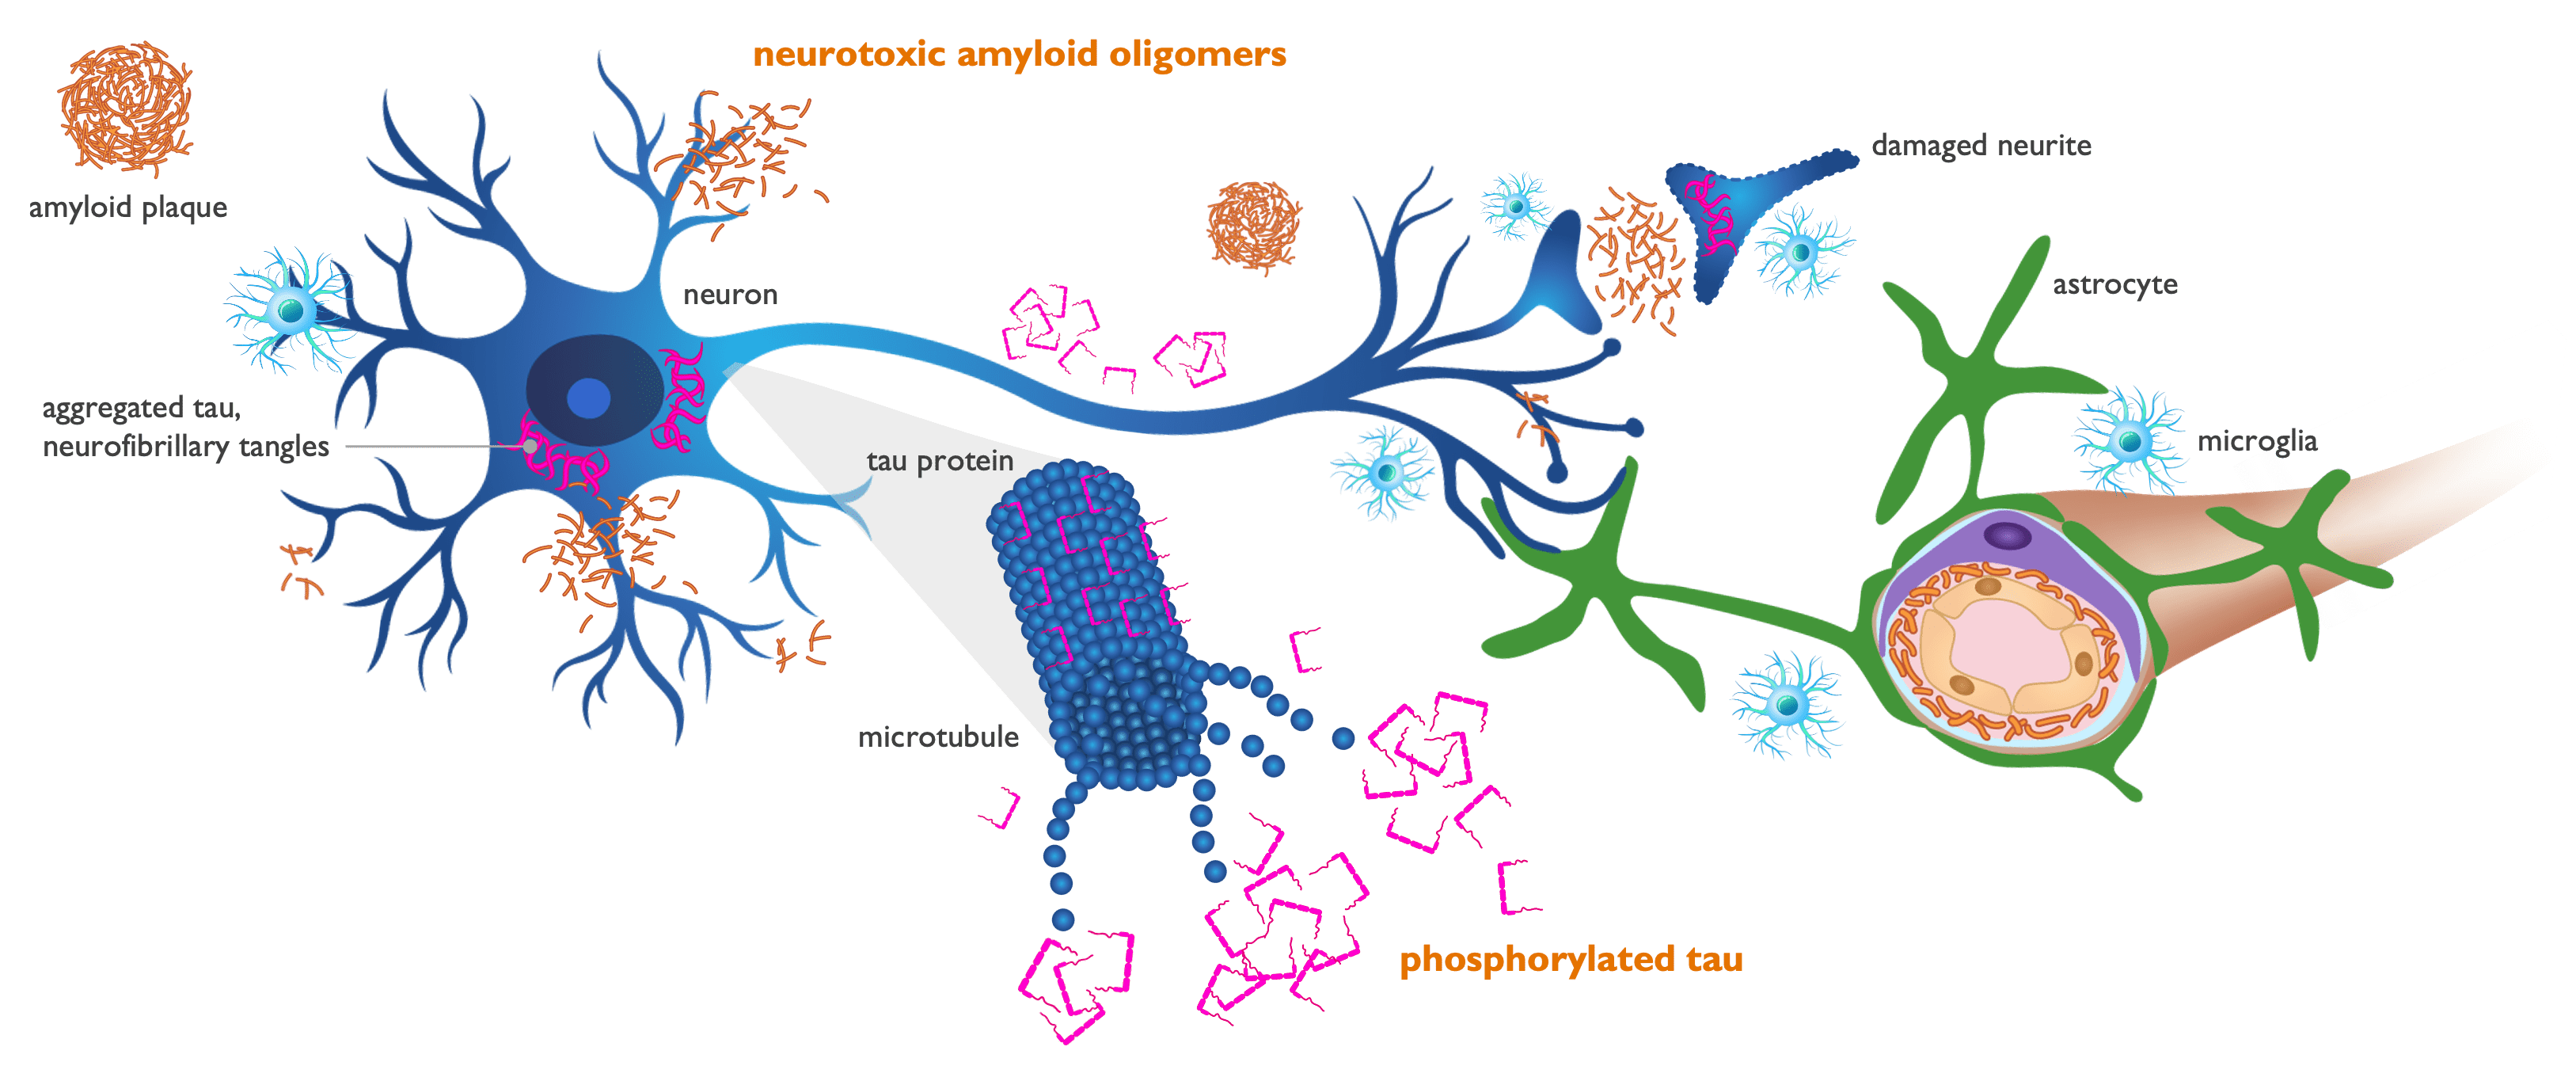 Amyloid-oligomers-drive-neurotoxicity-and-tau-pathology_Alzheon